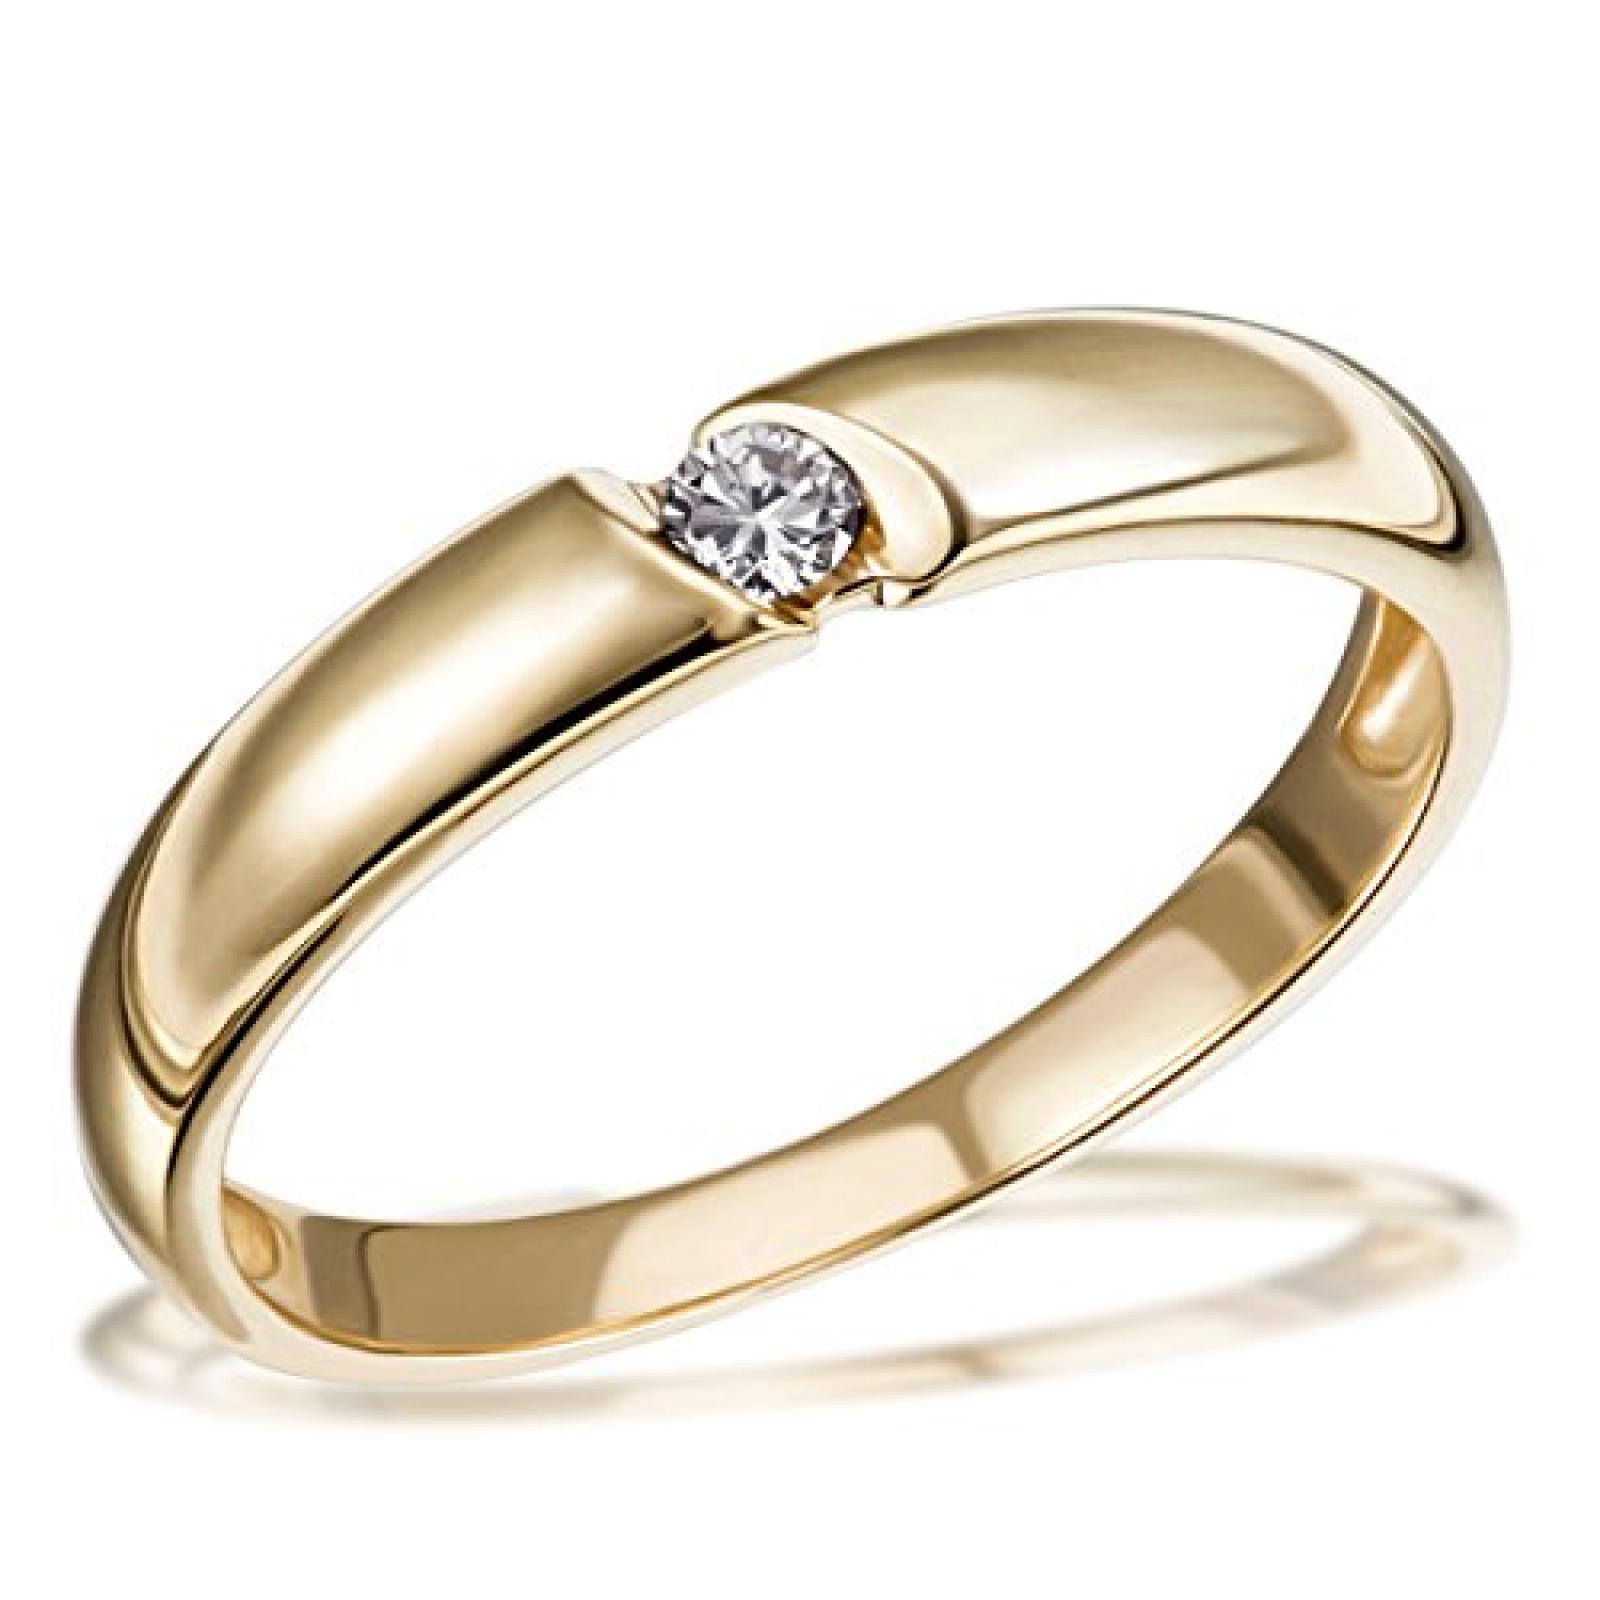 Goldmaid Damen-Ring Solitär Verlobungsring 585 Gelbgold 1 Brillant 0,07 ct. So R730GG 